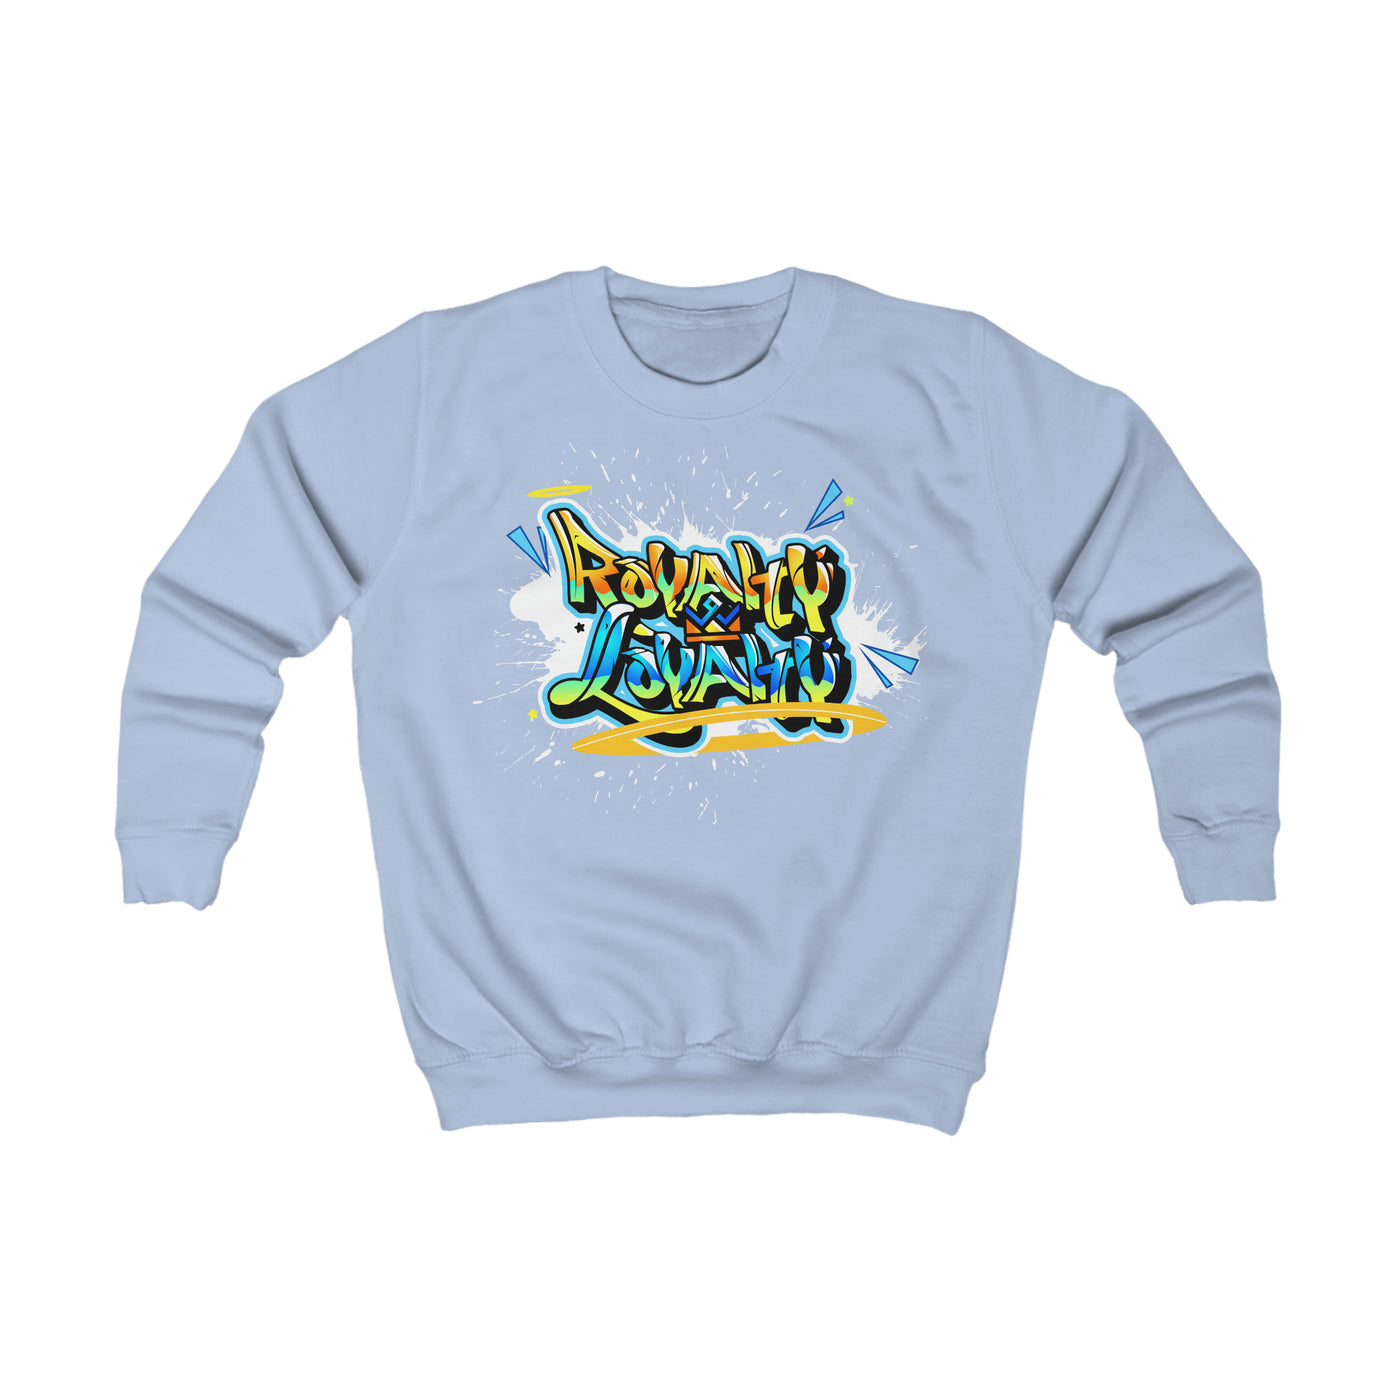 Royalty & Loyalty Kids Sweatshirt (9Colos)